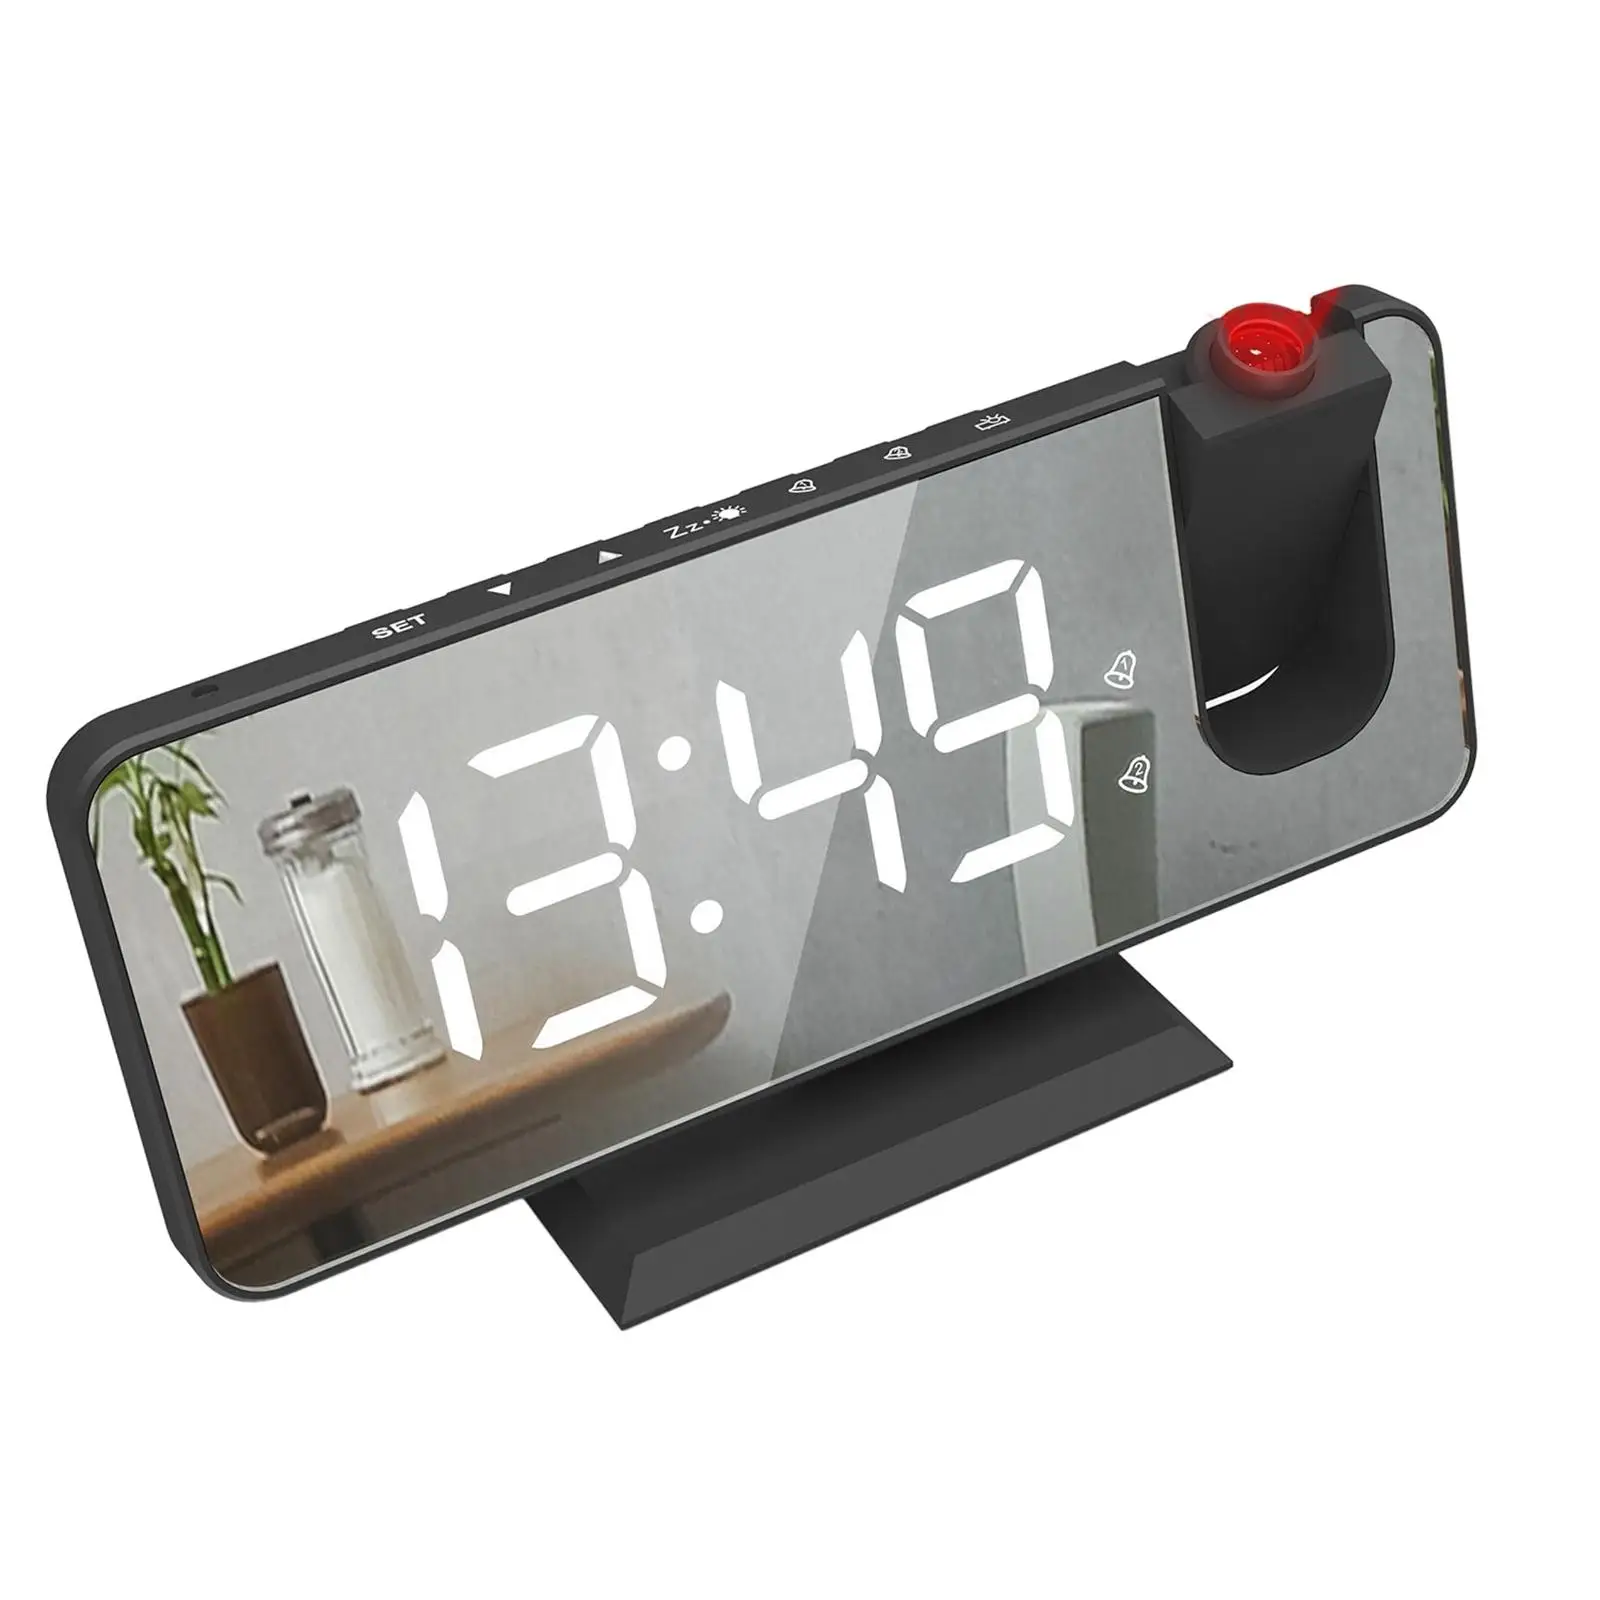 Digital 180 Projector Alarm Clock Large Screen Snooze Function Plug Dual Alarm Clock for Heavy Sleeper Elders Bedroom